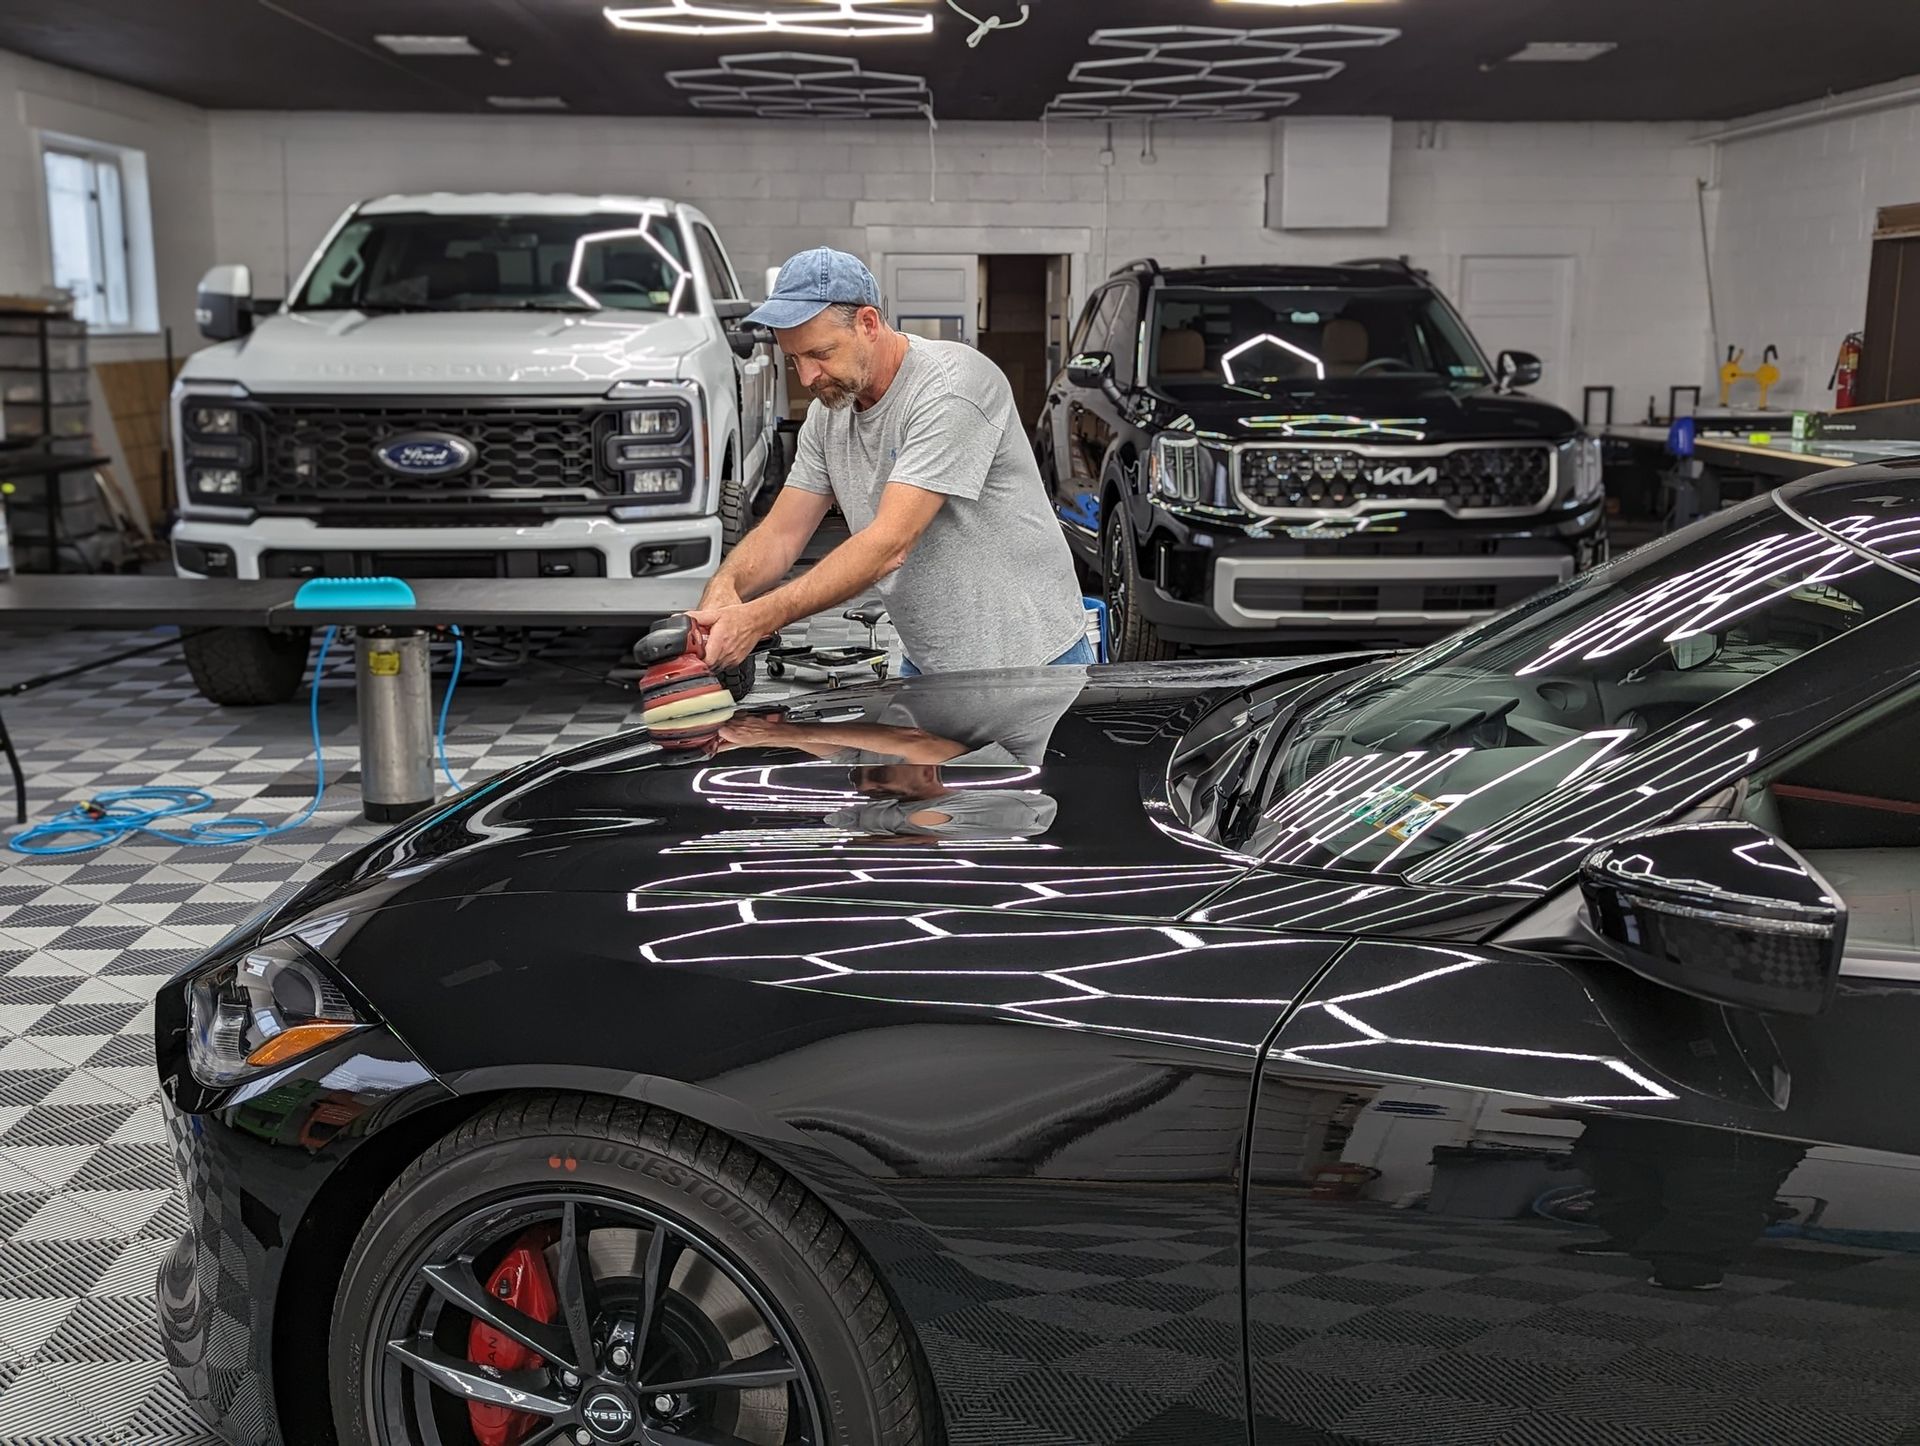 a man is polishing the hood of a black car in a garage .